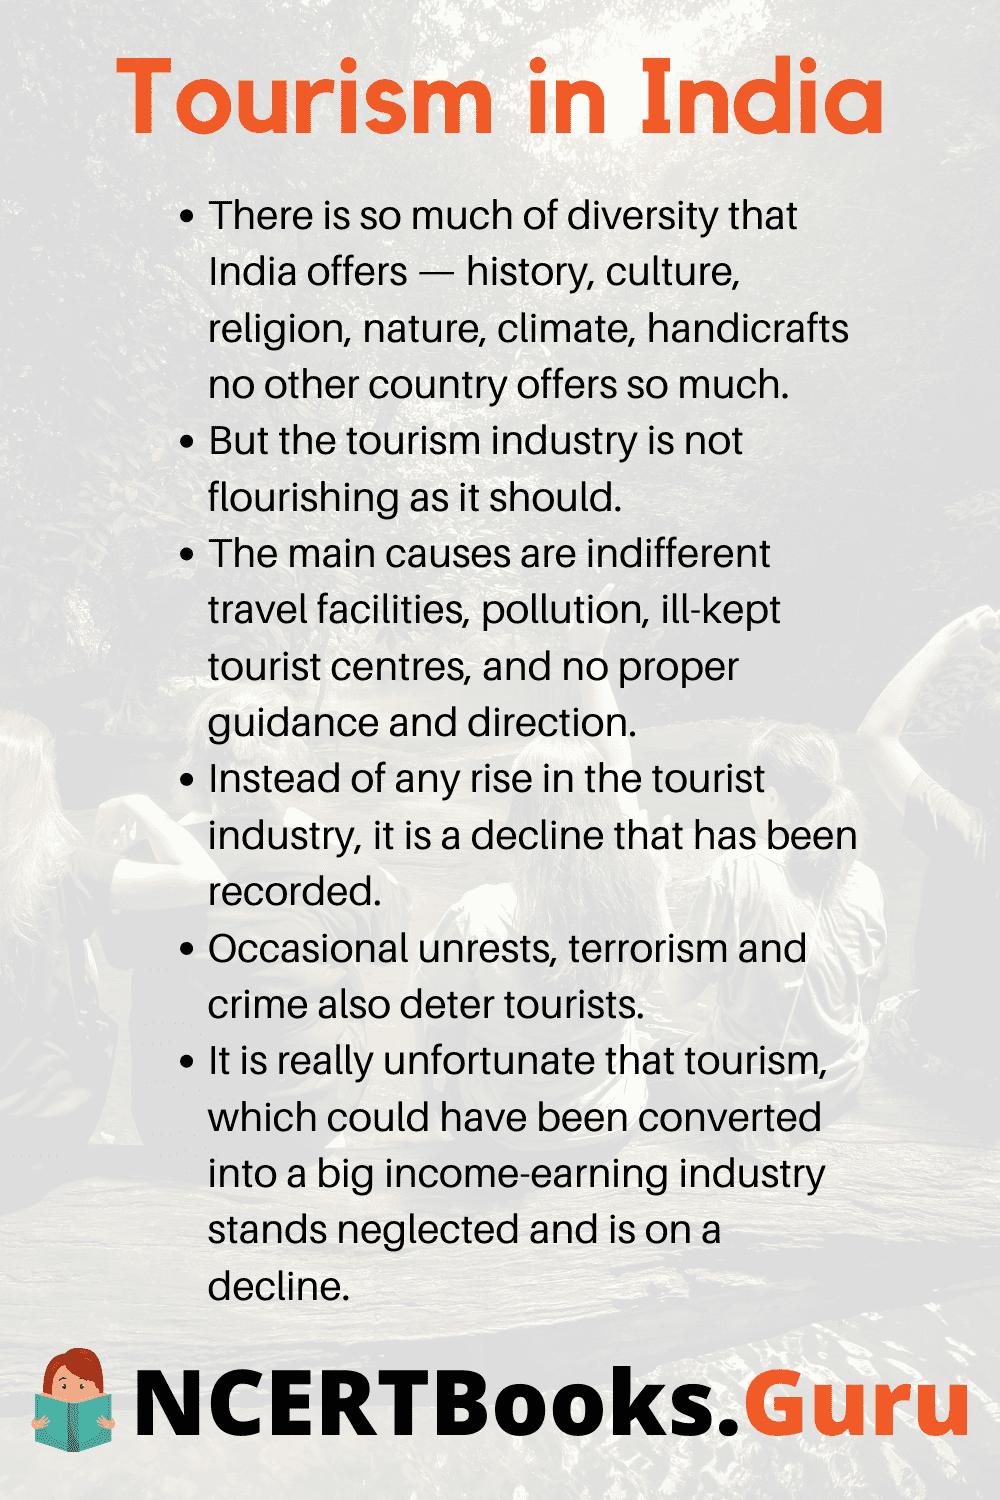 tourism in kerala essay